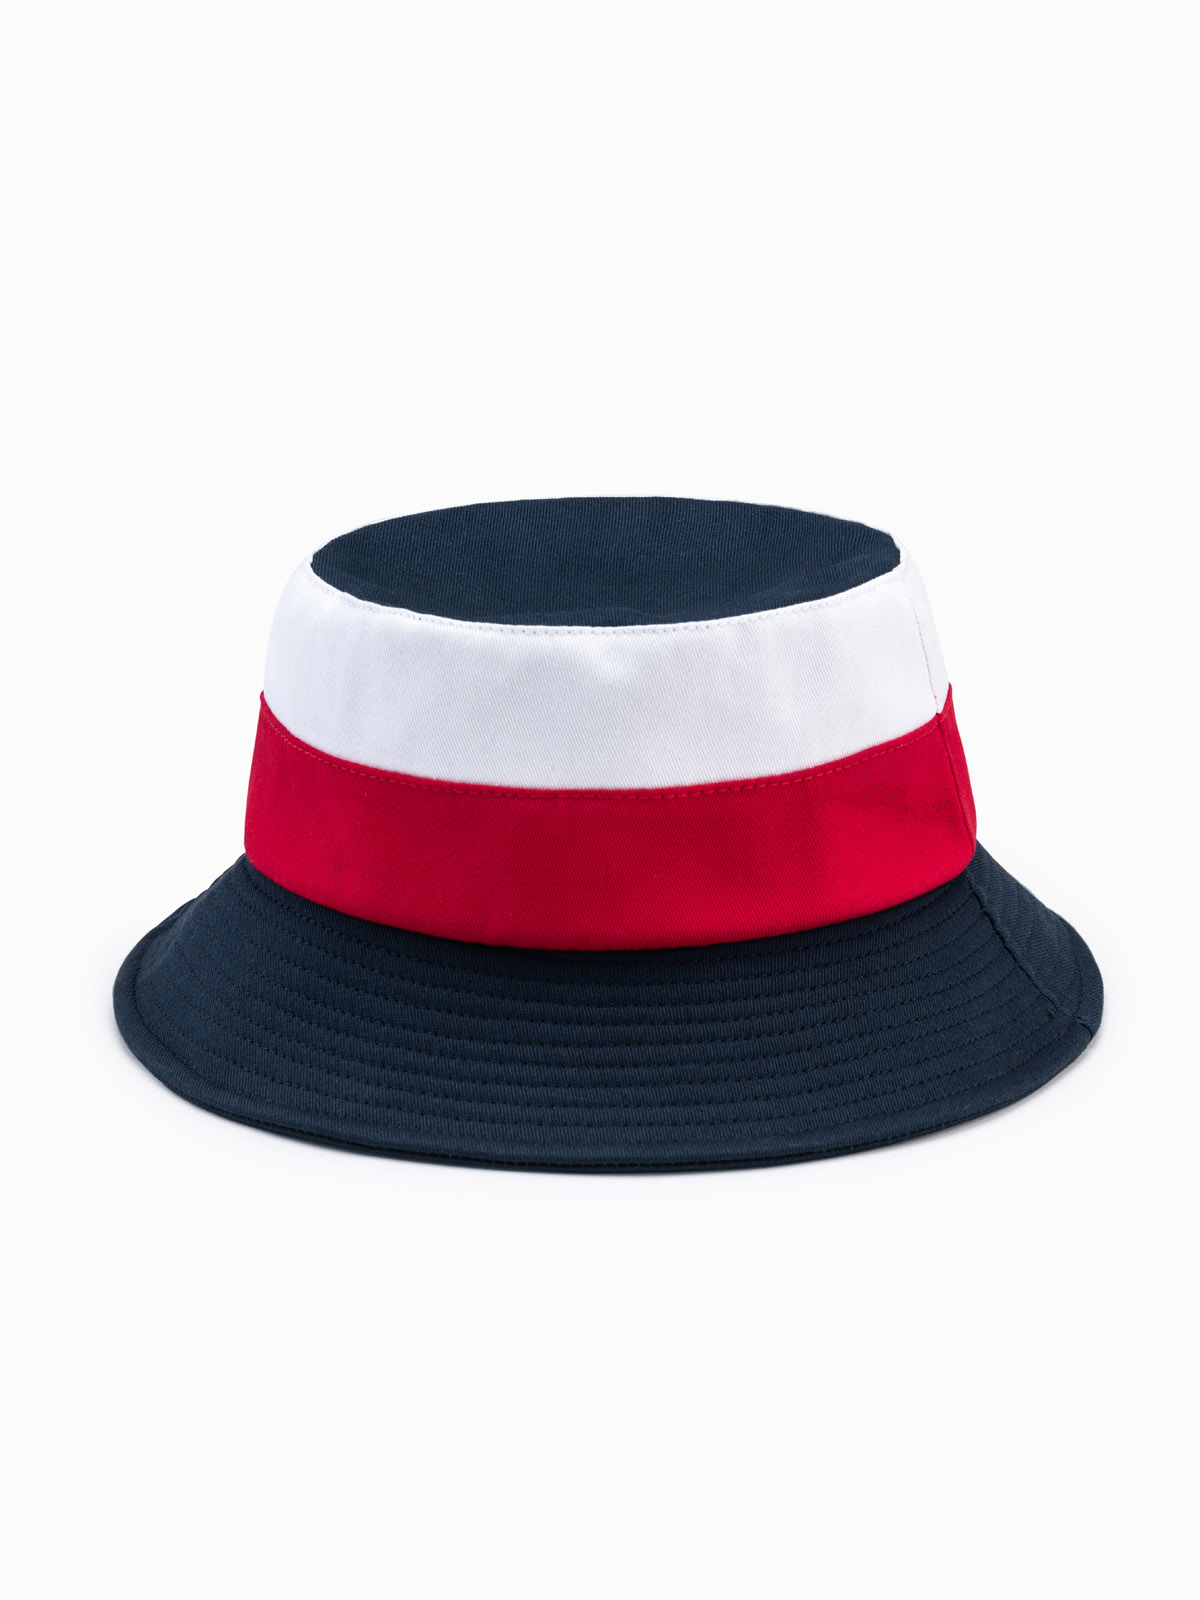 Edoti Men's hat